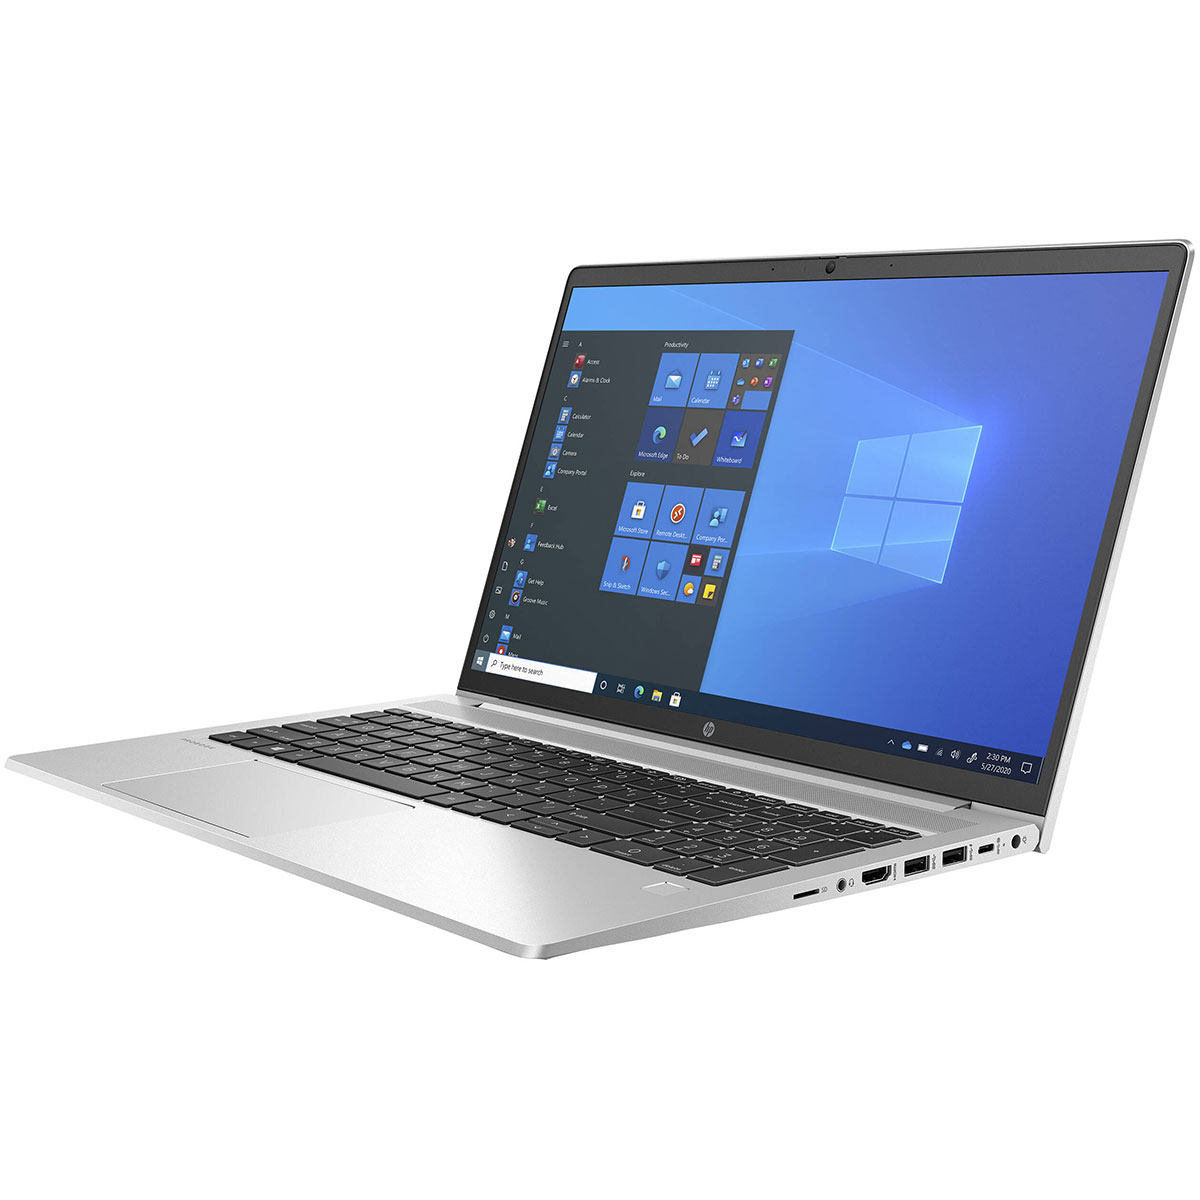 HP Probook 450 G8 - Core i5-1135G7, 8GB RAM DDR4-3200 (1x8), 256GB SSD, 15.6" FHD, Silver, 720P HD Camera, Numeric keypad, Windows 10 Pro, No ODD - 150C7EA